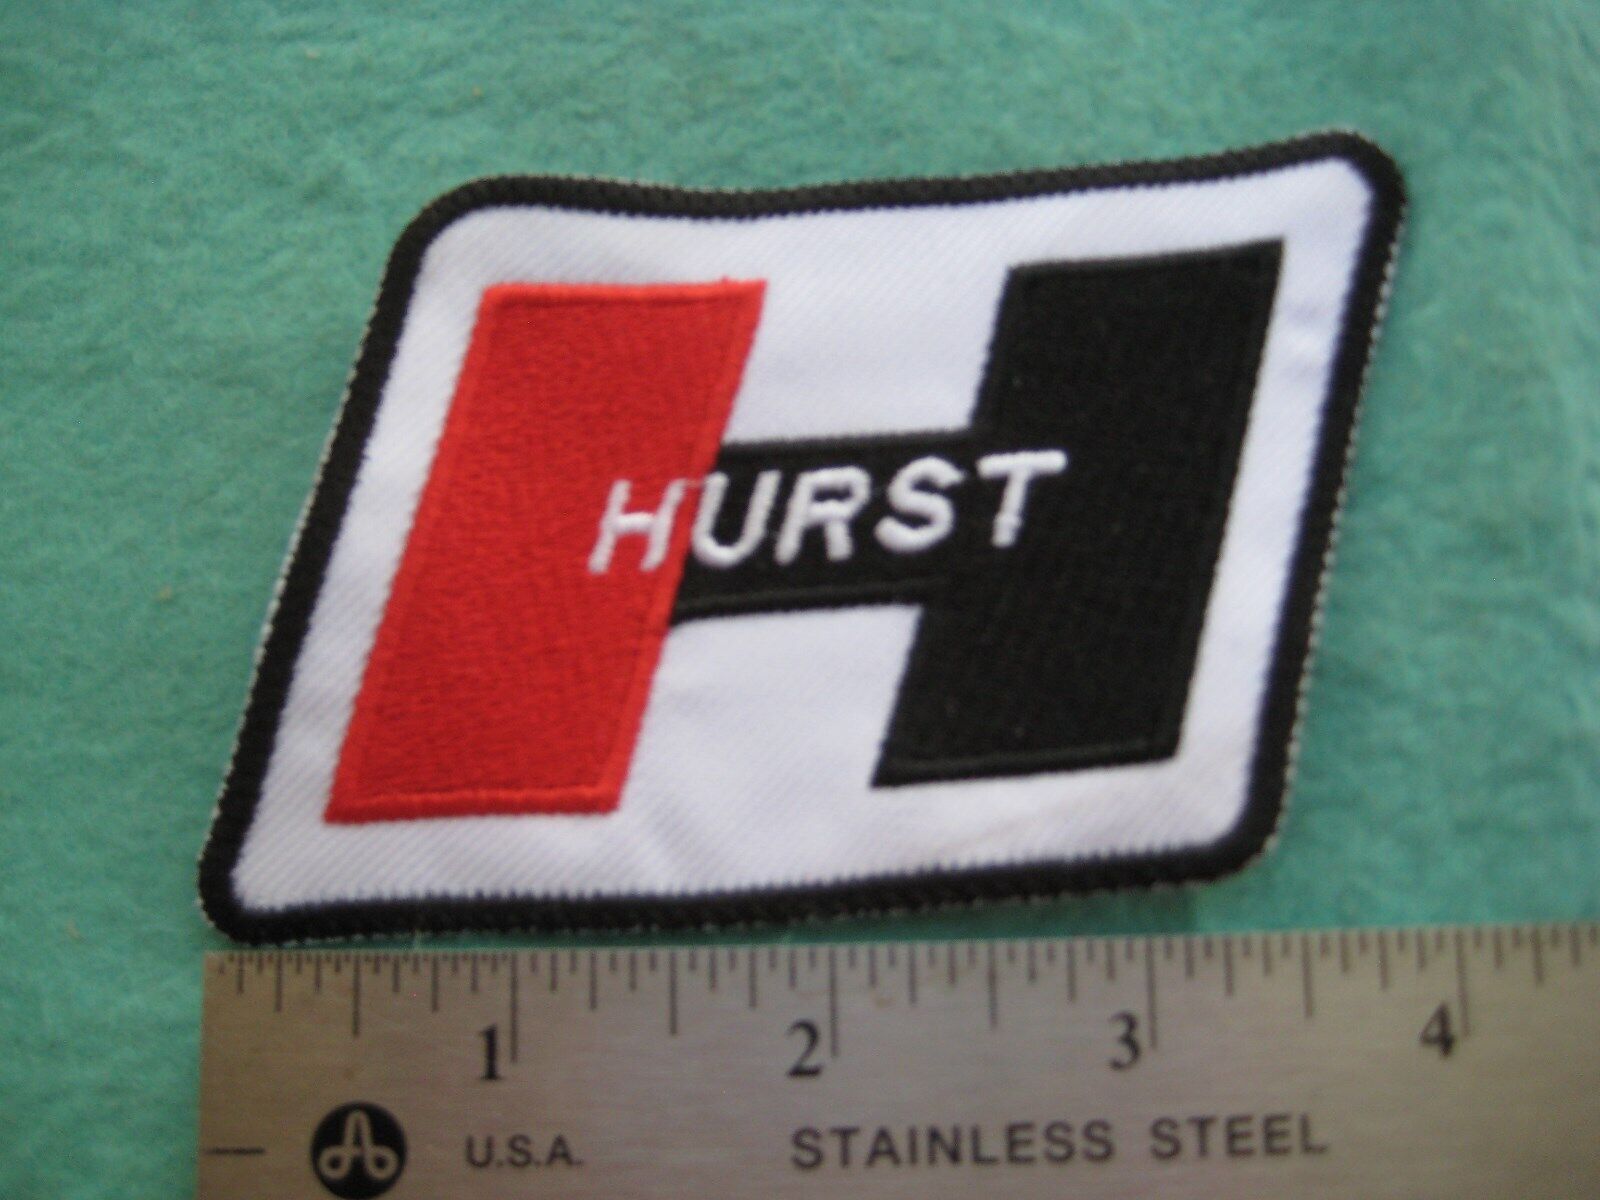 Hurst Racing Equipment   Service Parts Dealer Jacket Patch